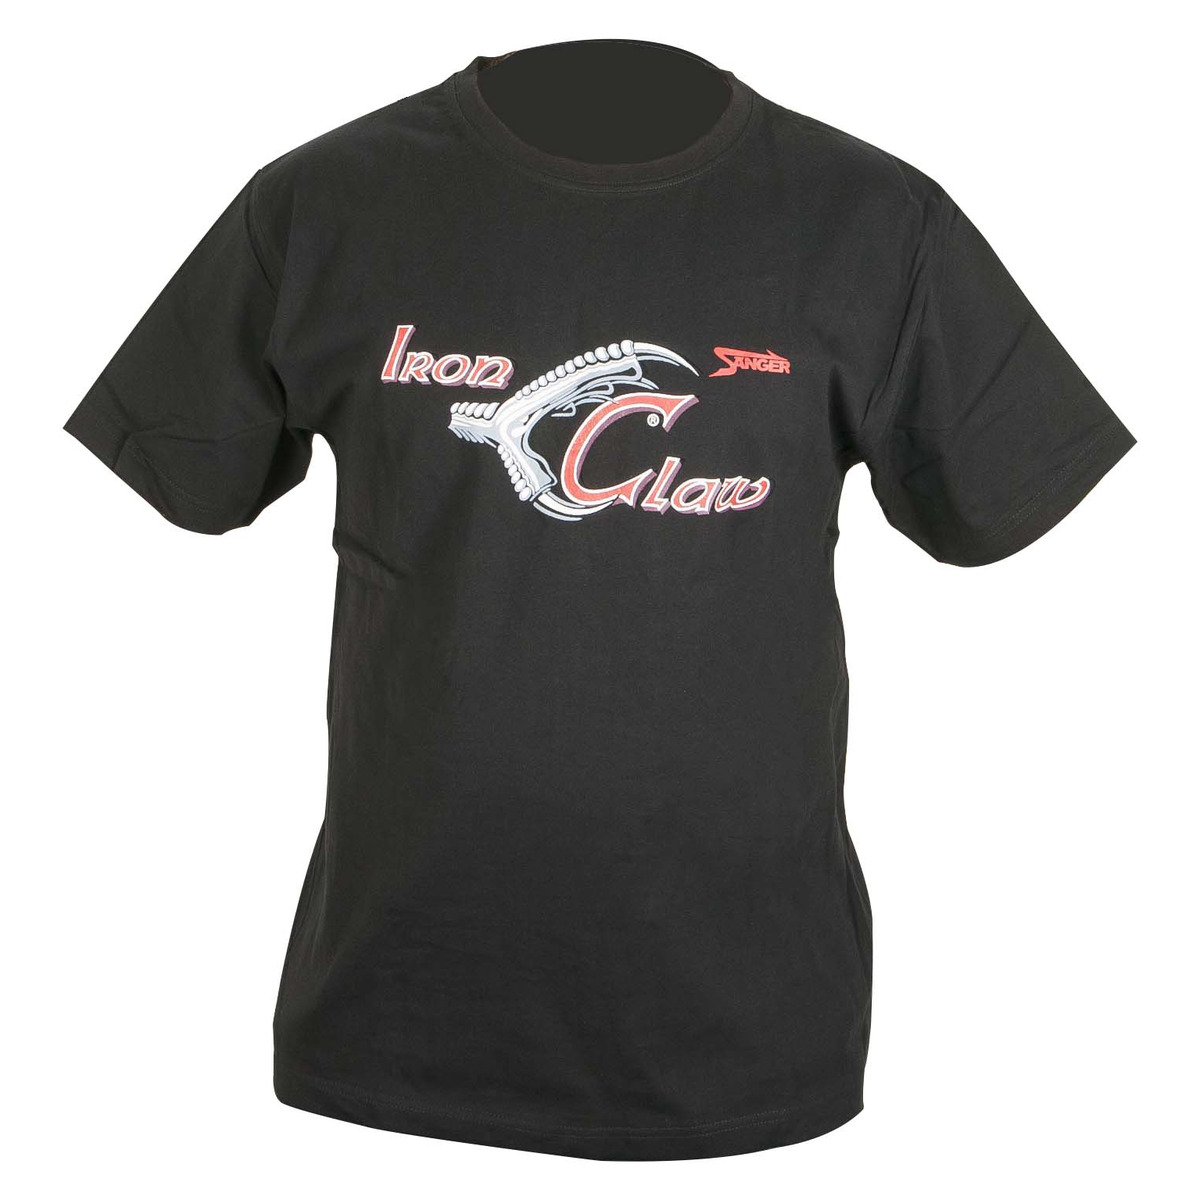 Iron Claw T-shirt - XL